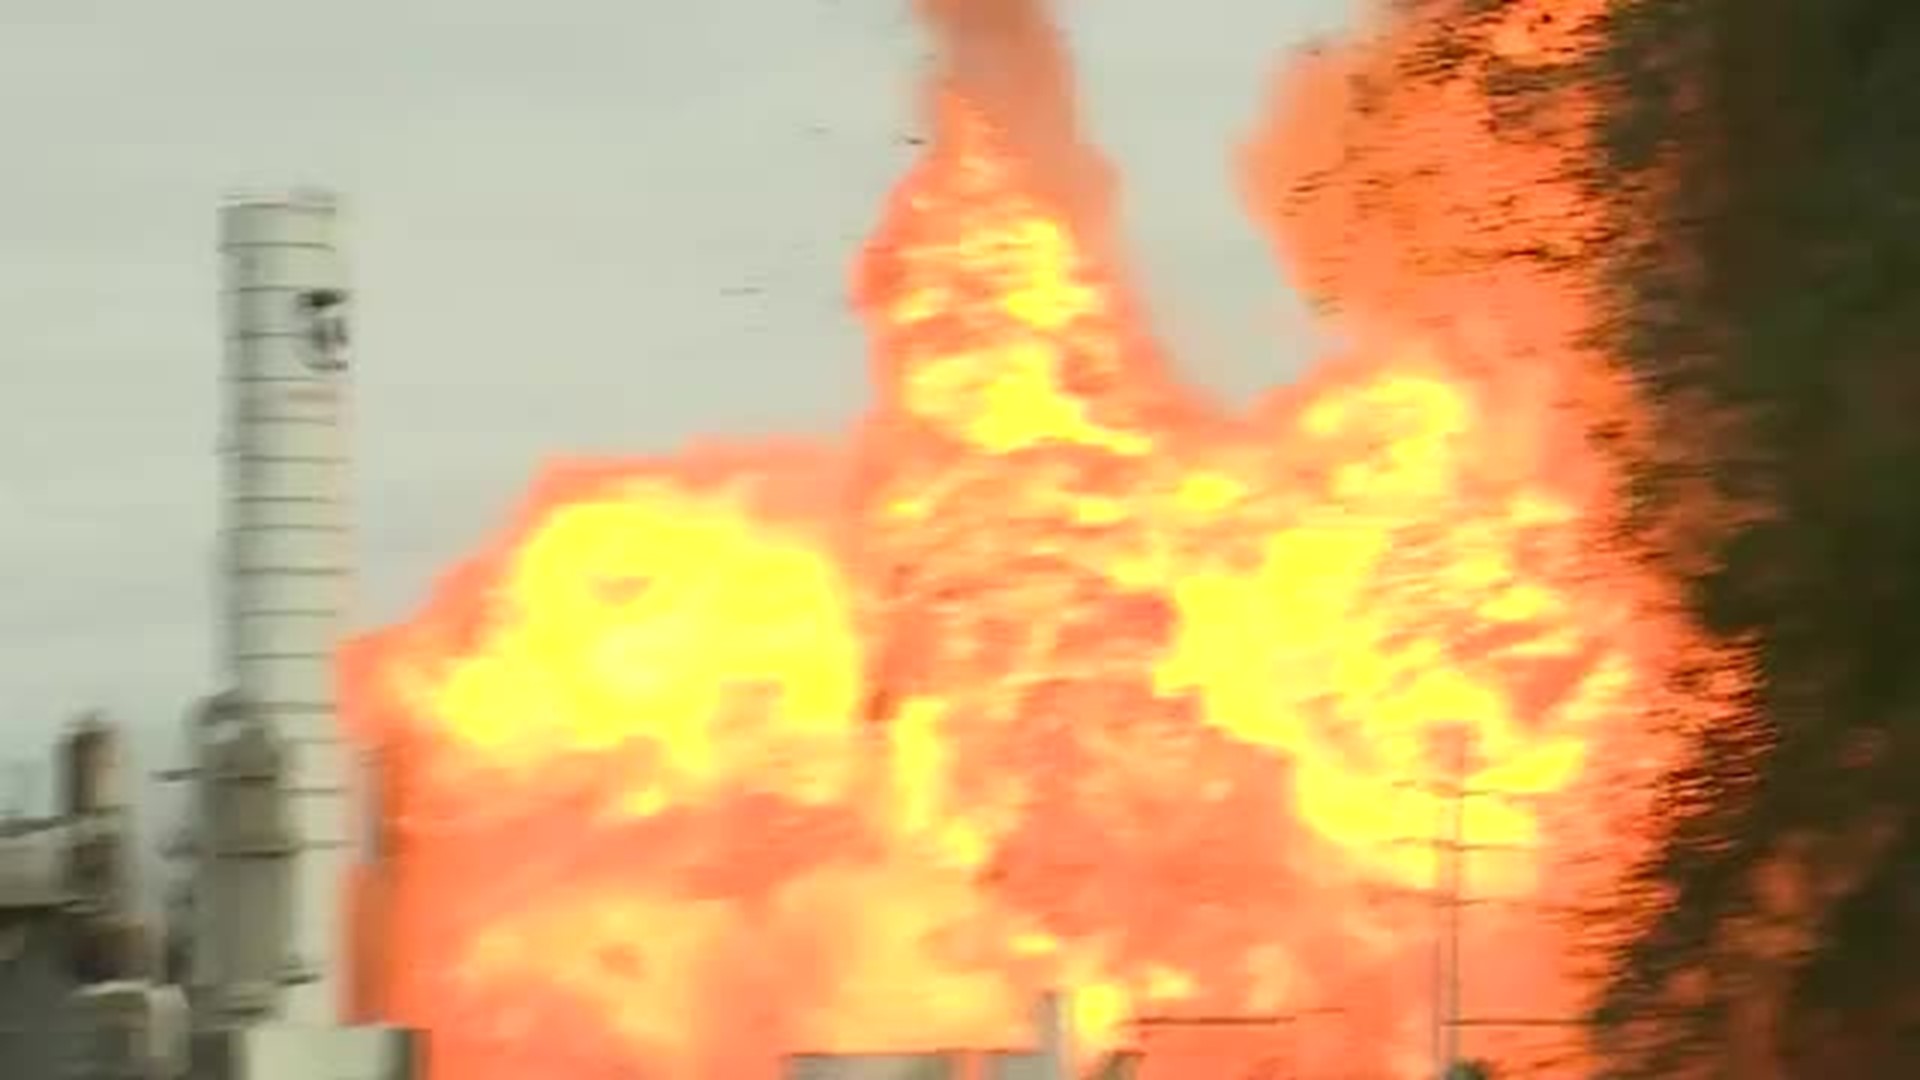 Texas plant explosion